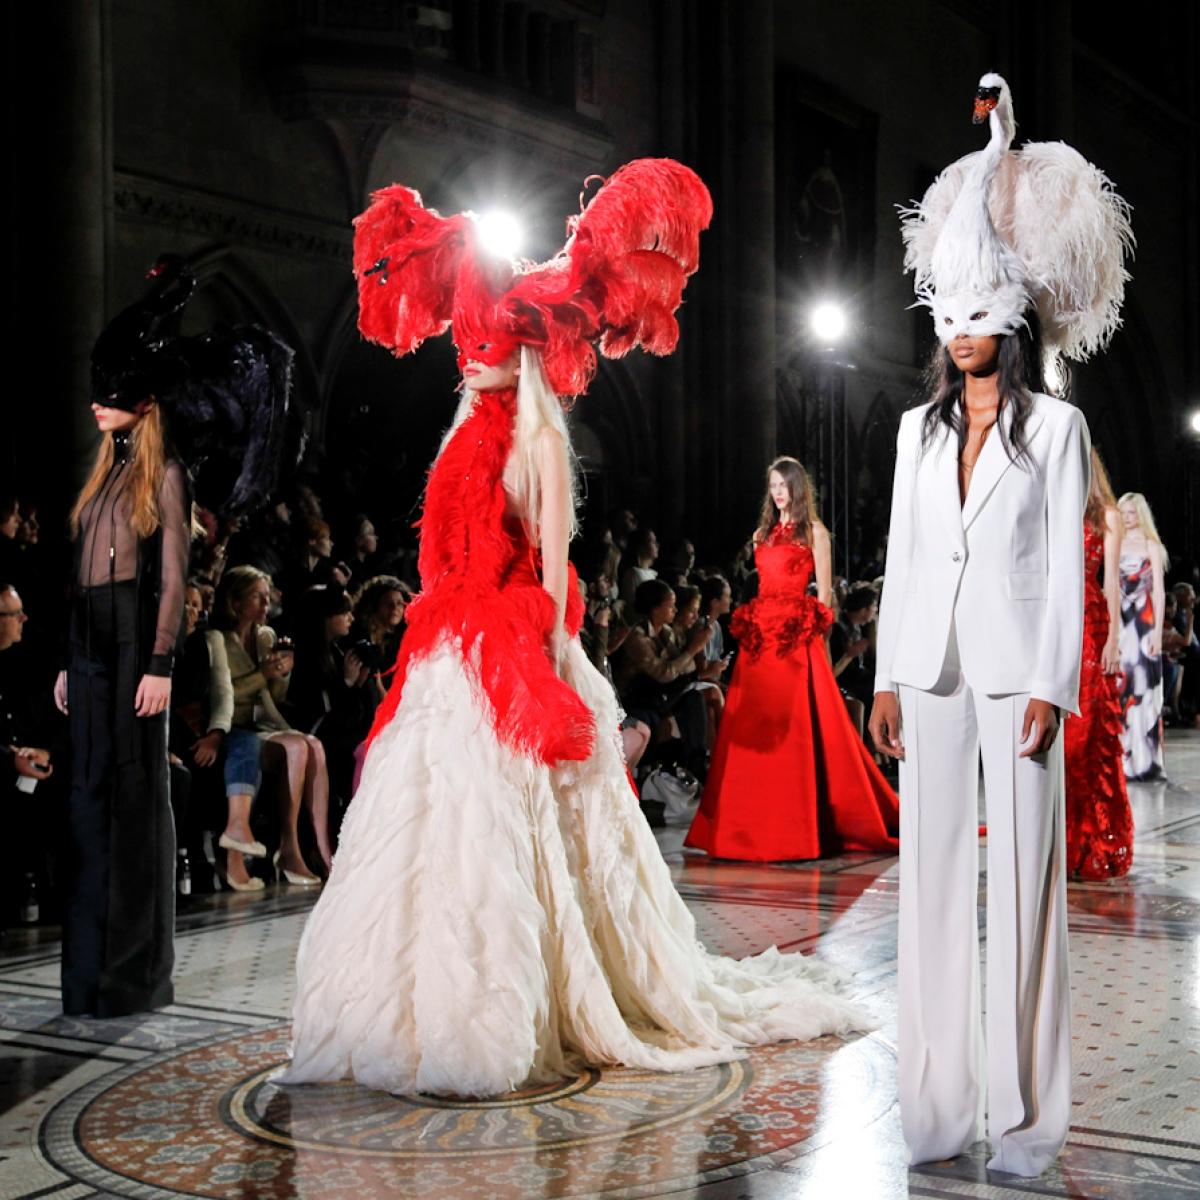 15 Years of TONI&GUY hair on London Fashion Week runways